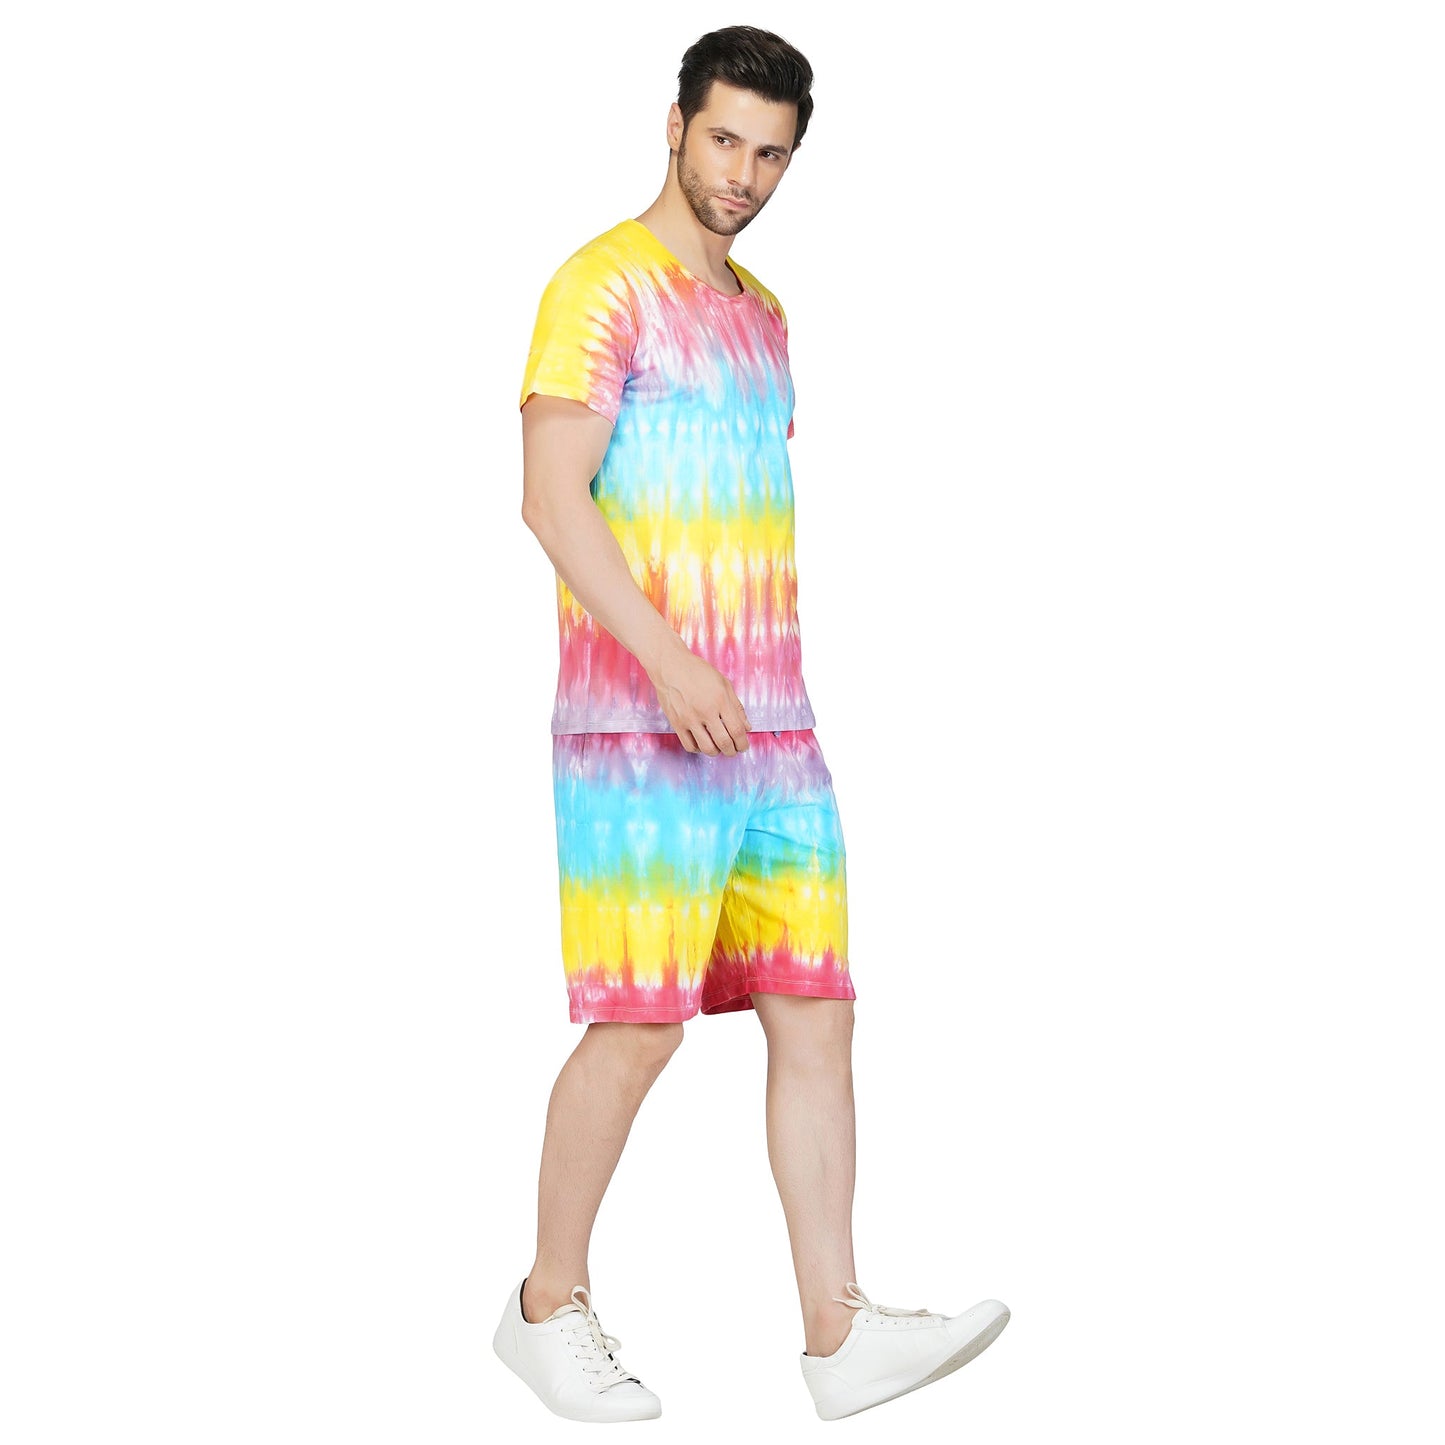 SLAY. Men's Rainbow Tie Dye T shirt